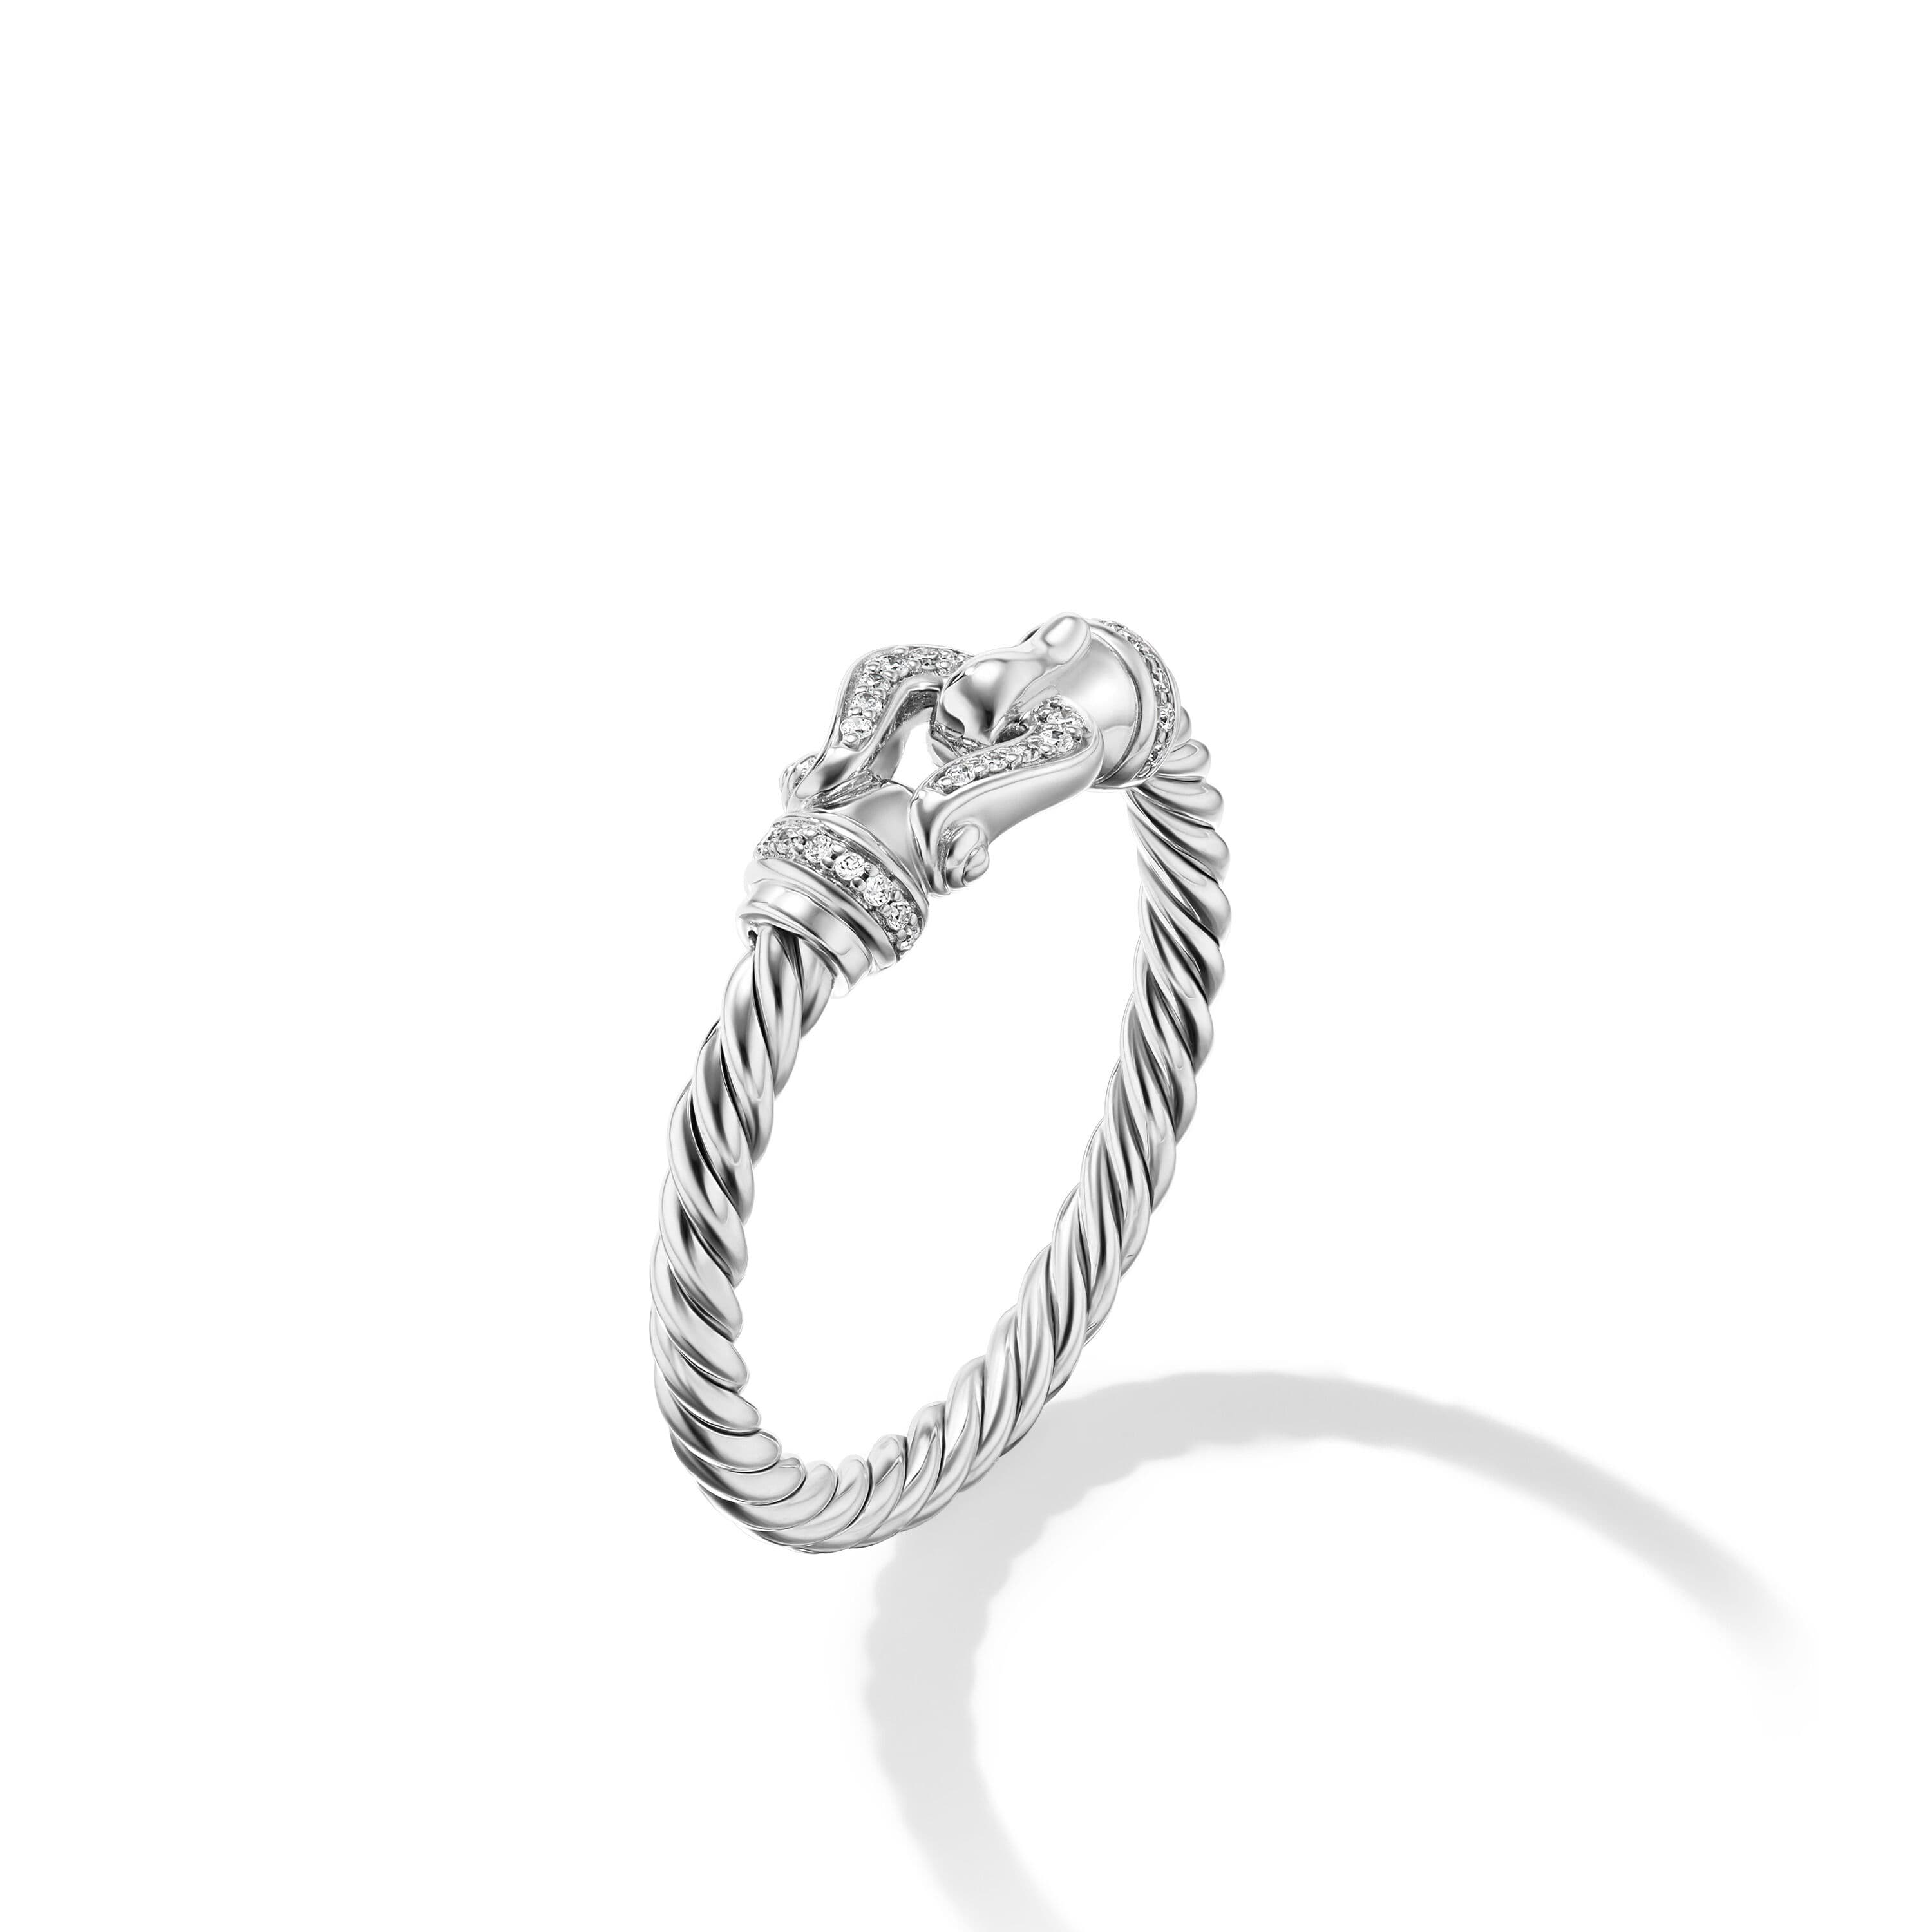 David Yurman Sterling Silver Petite Buckle Ring with Diamonds, Size 6 1